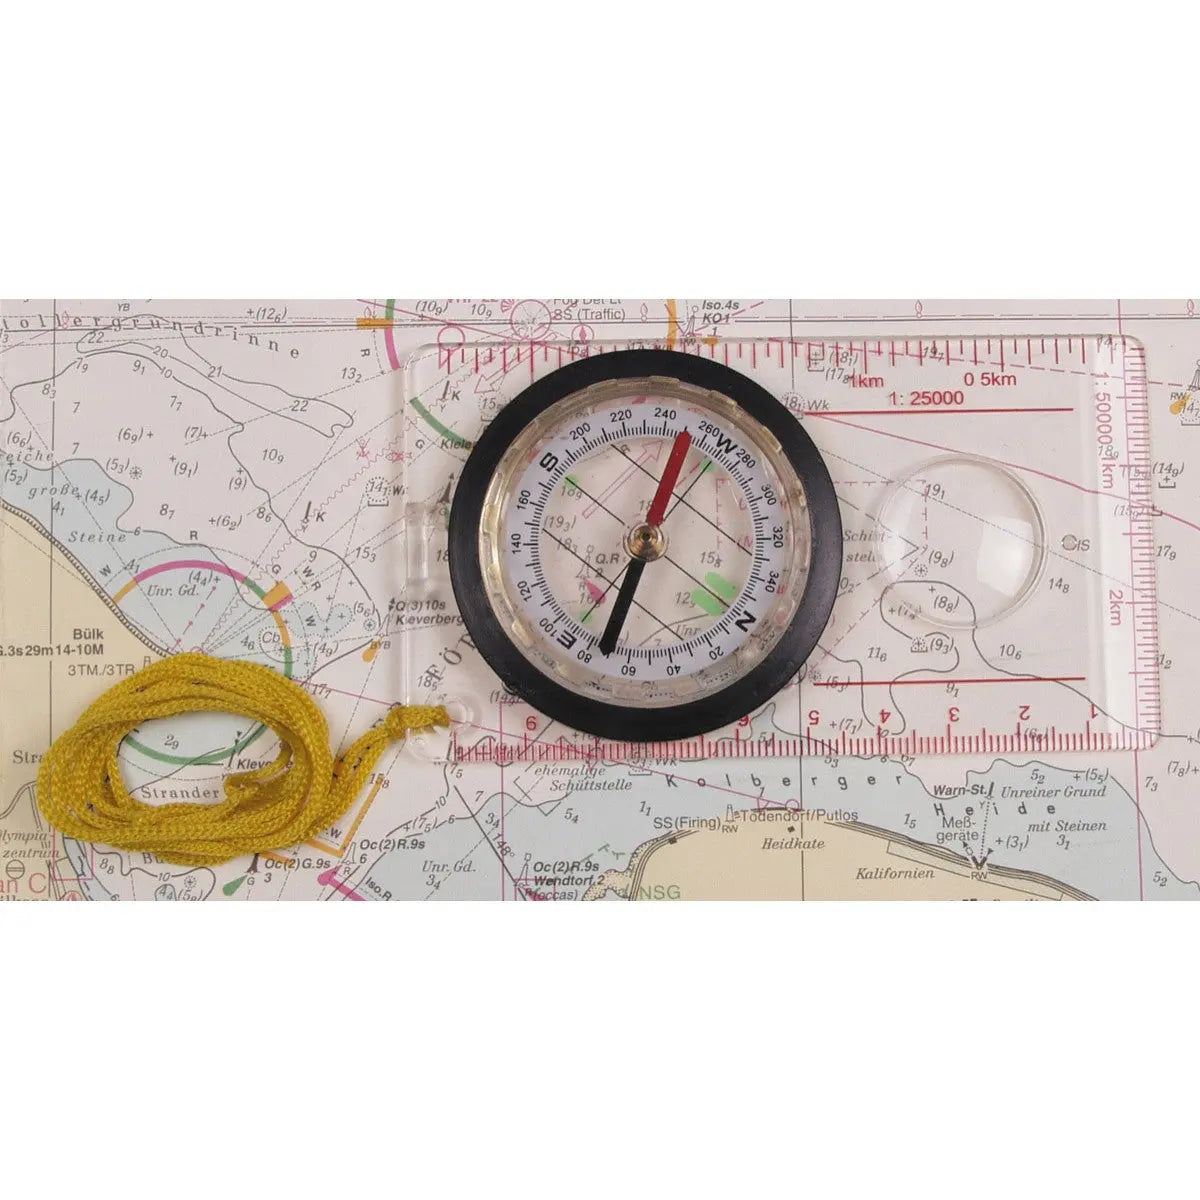 Map compass, transparent, plastic housing NSO Gear compass